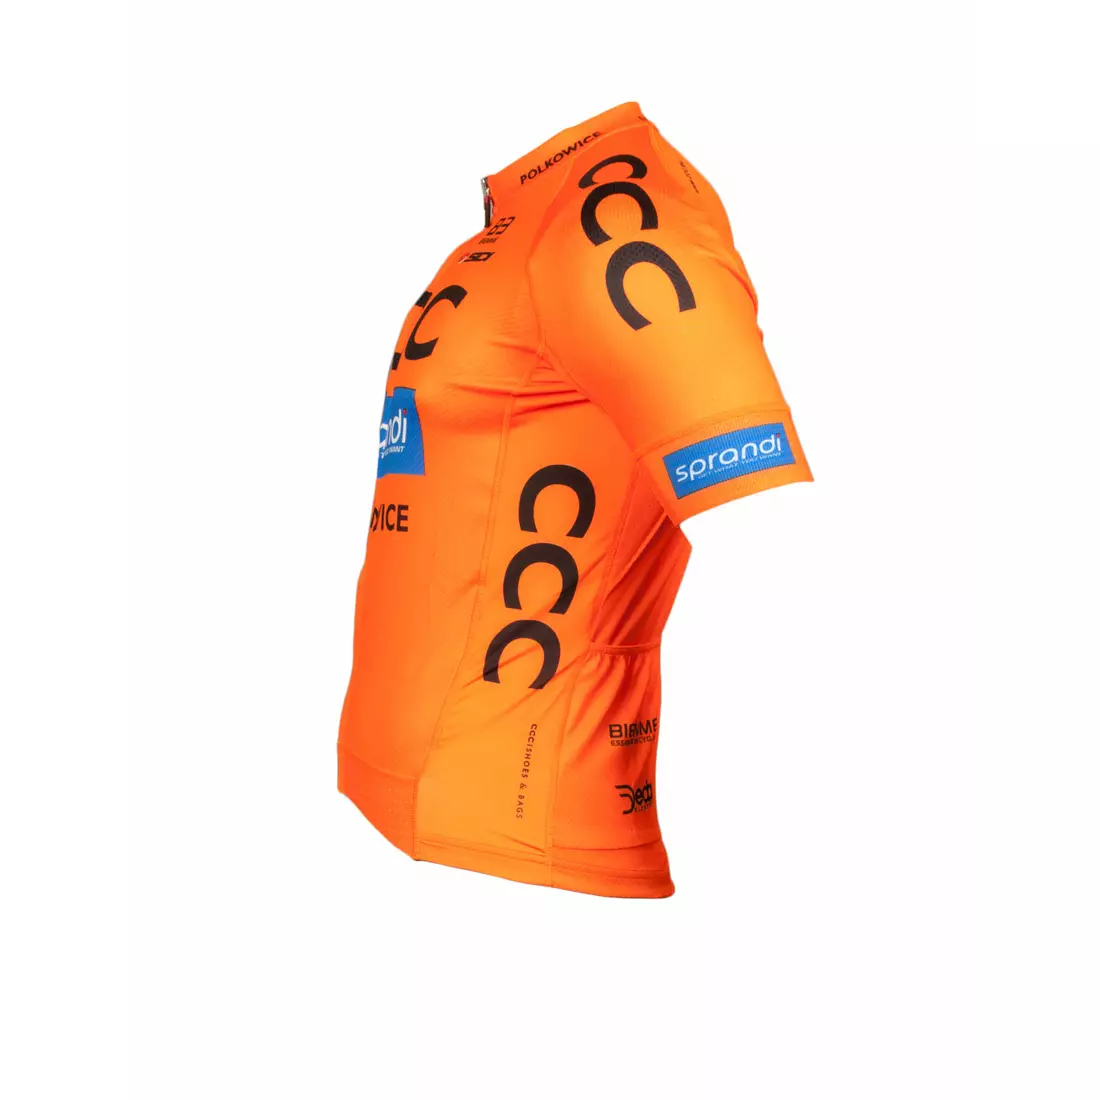 BIEMME CCC SPRANDI POLKOWICE Racing Team 2017 PRO tricou de ciclism masculin